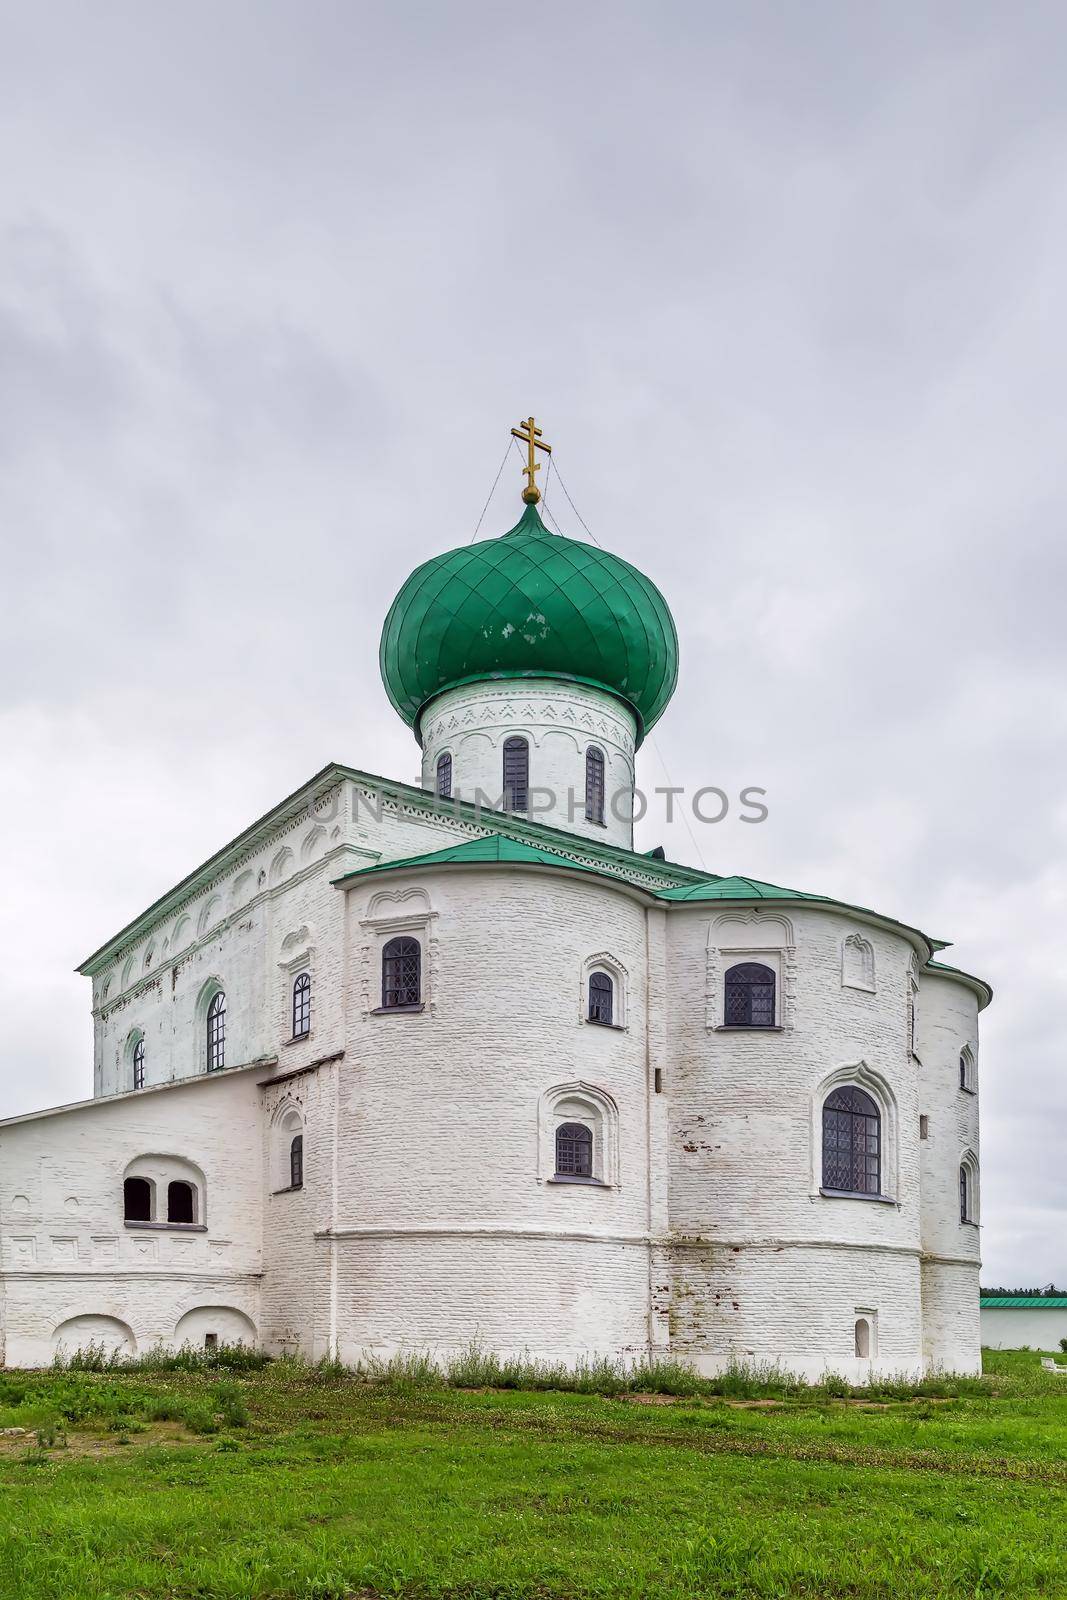 Alexander-Svirsky Monastery is orthodox monastery in the Leningrad region, Russia. Trinity Cathedral